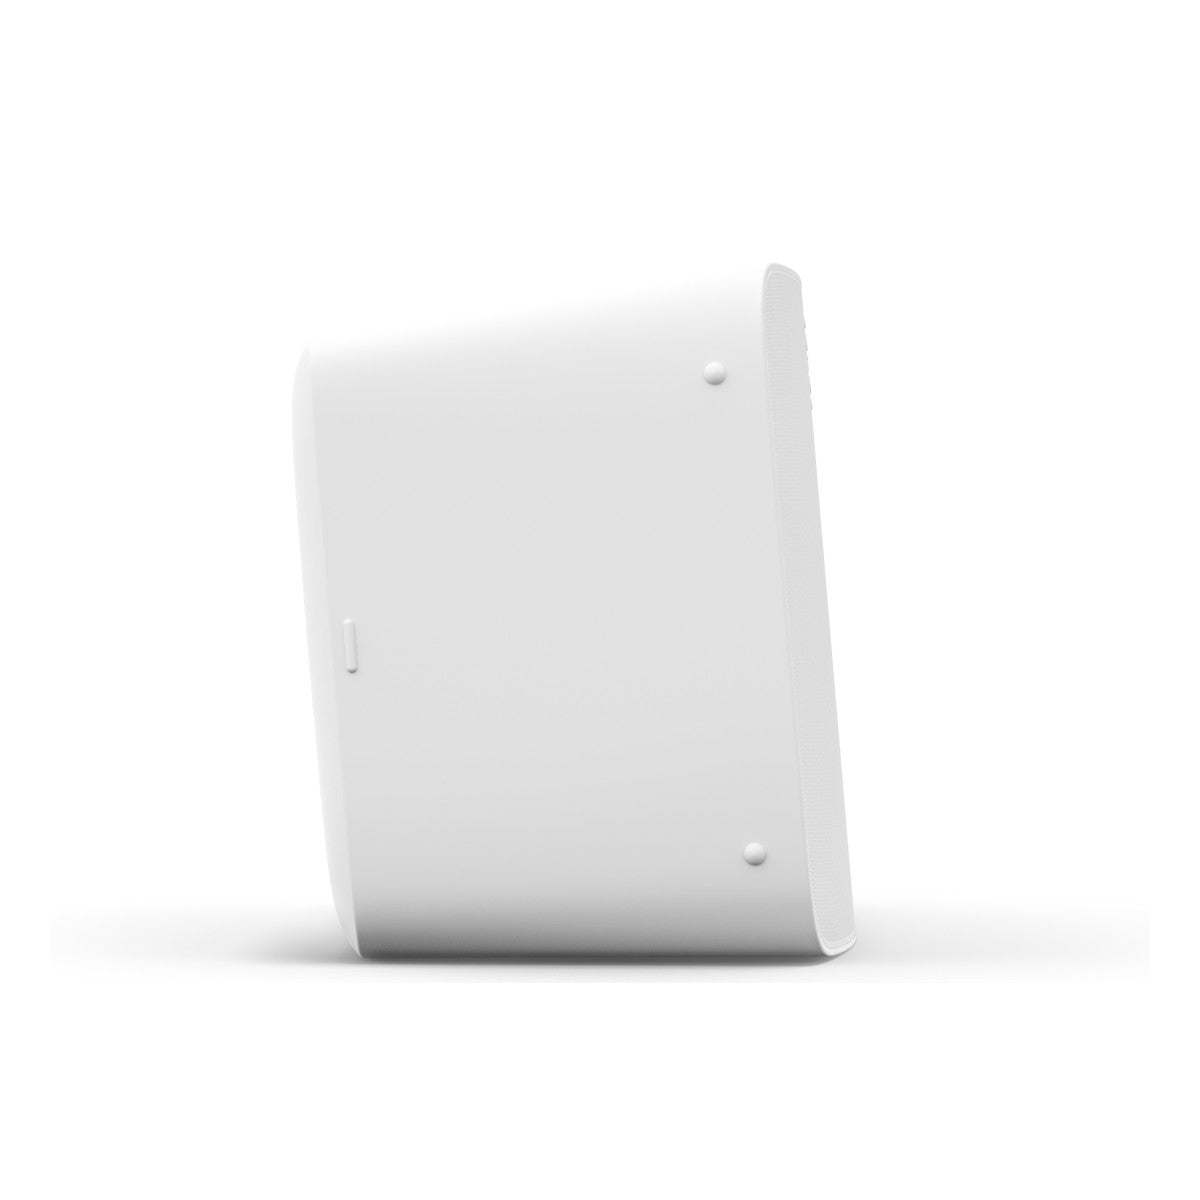 Sonos Five Wireless Speaker with Wall Mount (White)